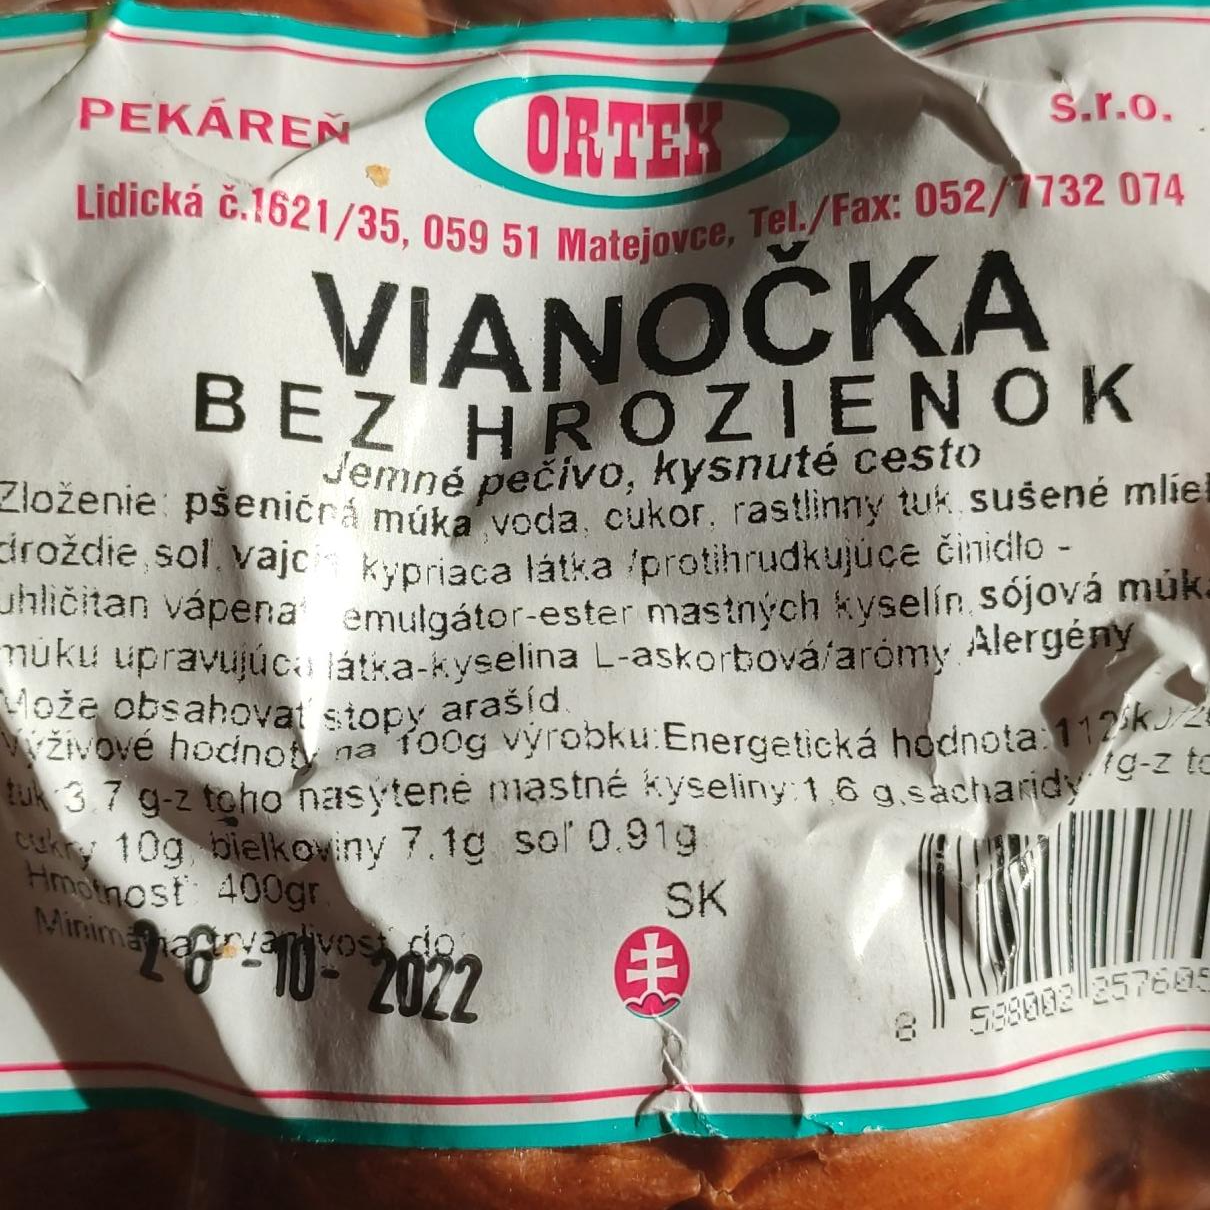 Fotografie - Vianočka bez hrozienok Ortek